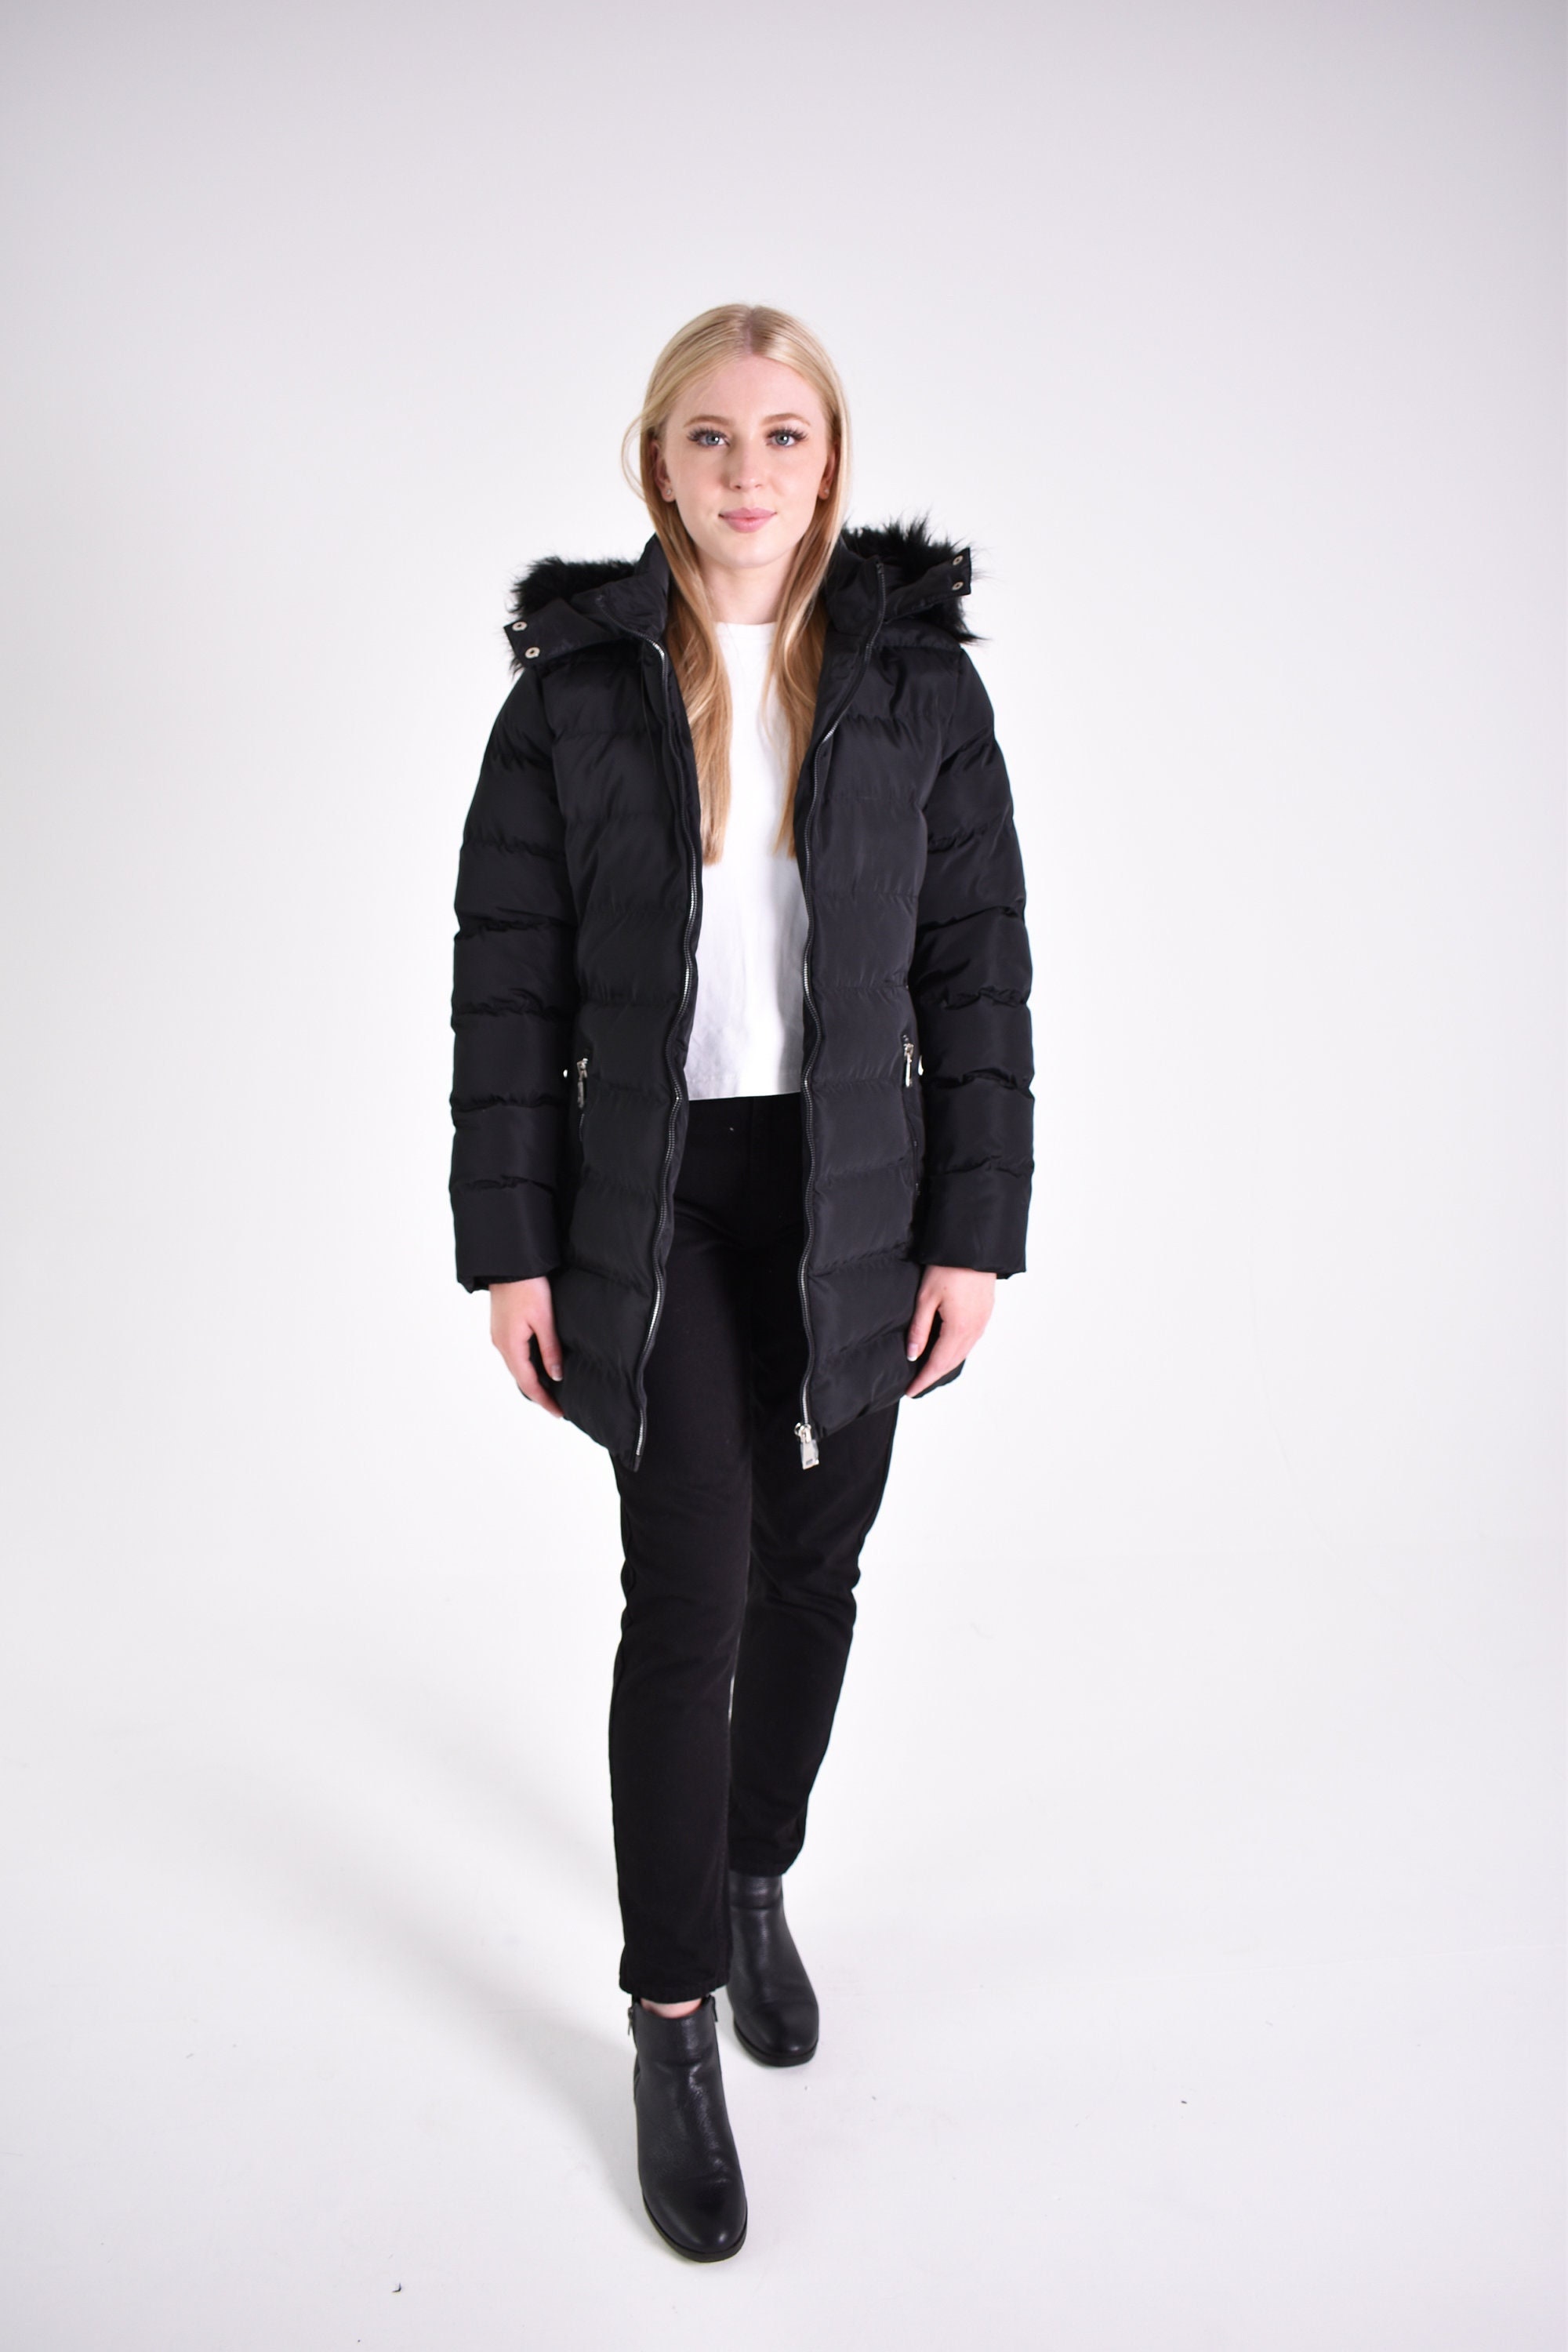 Charcoal Fashion Women's Winter Coat CFW21139-BK - Etsy